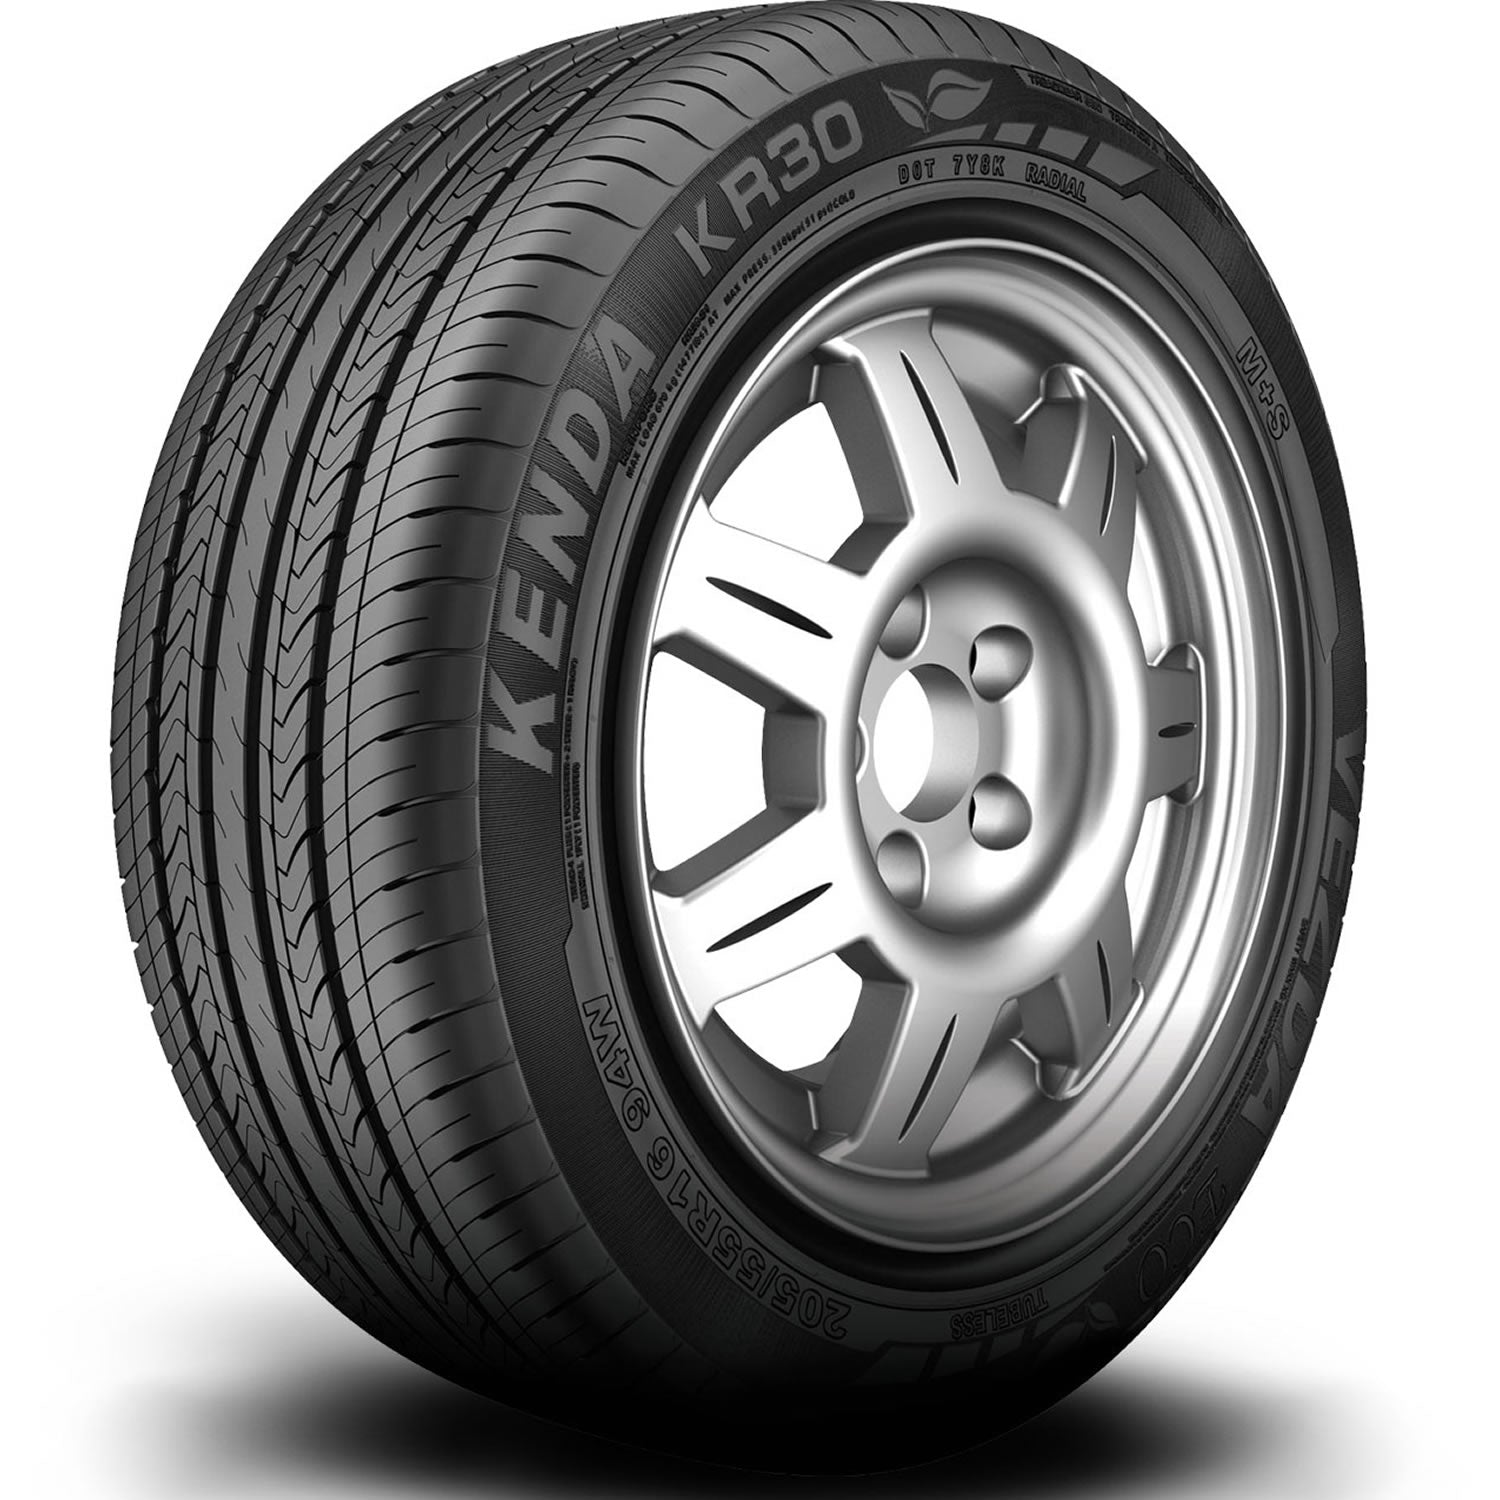 KENDA VEZDA ECO 195/65R15 (25X7.9R 15) Tires